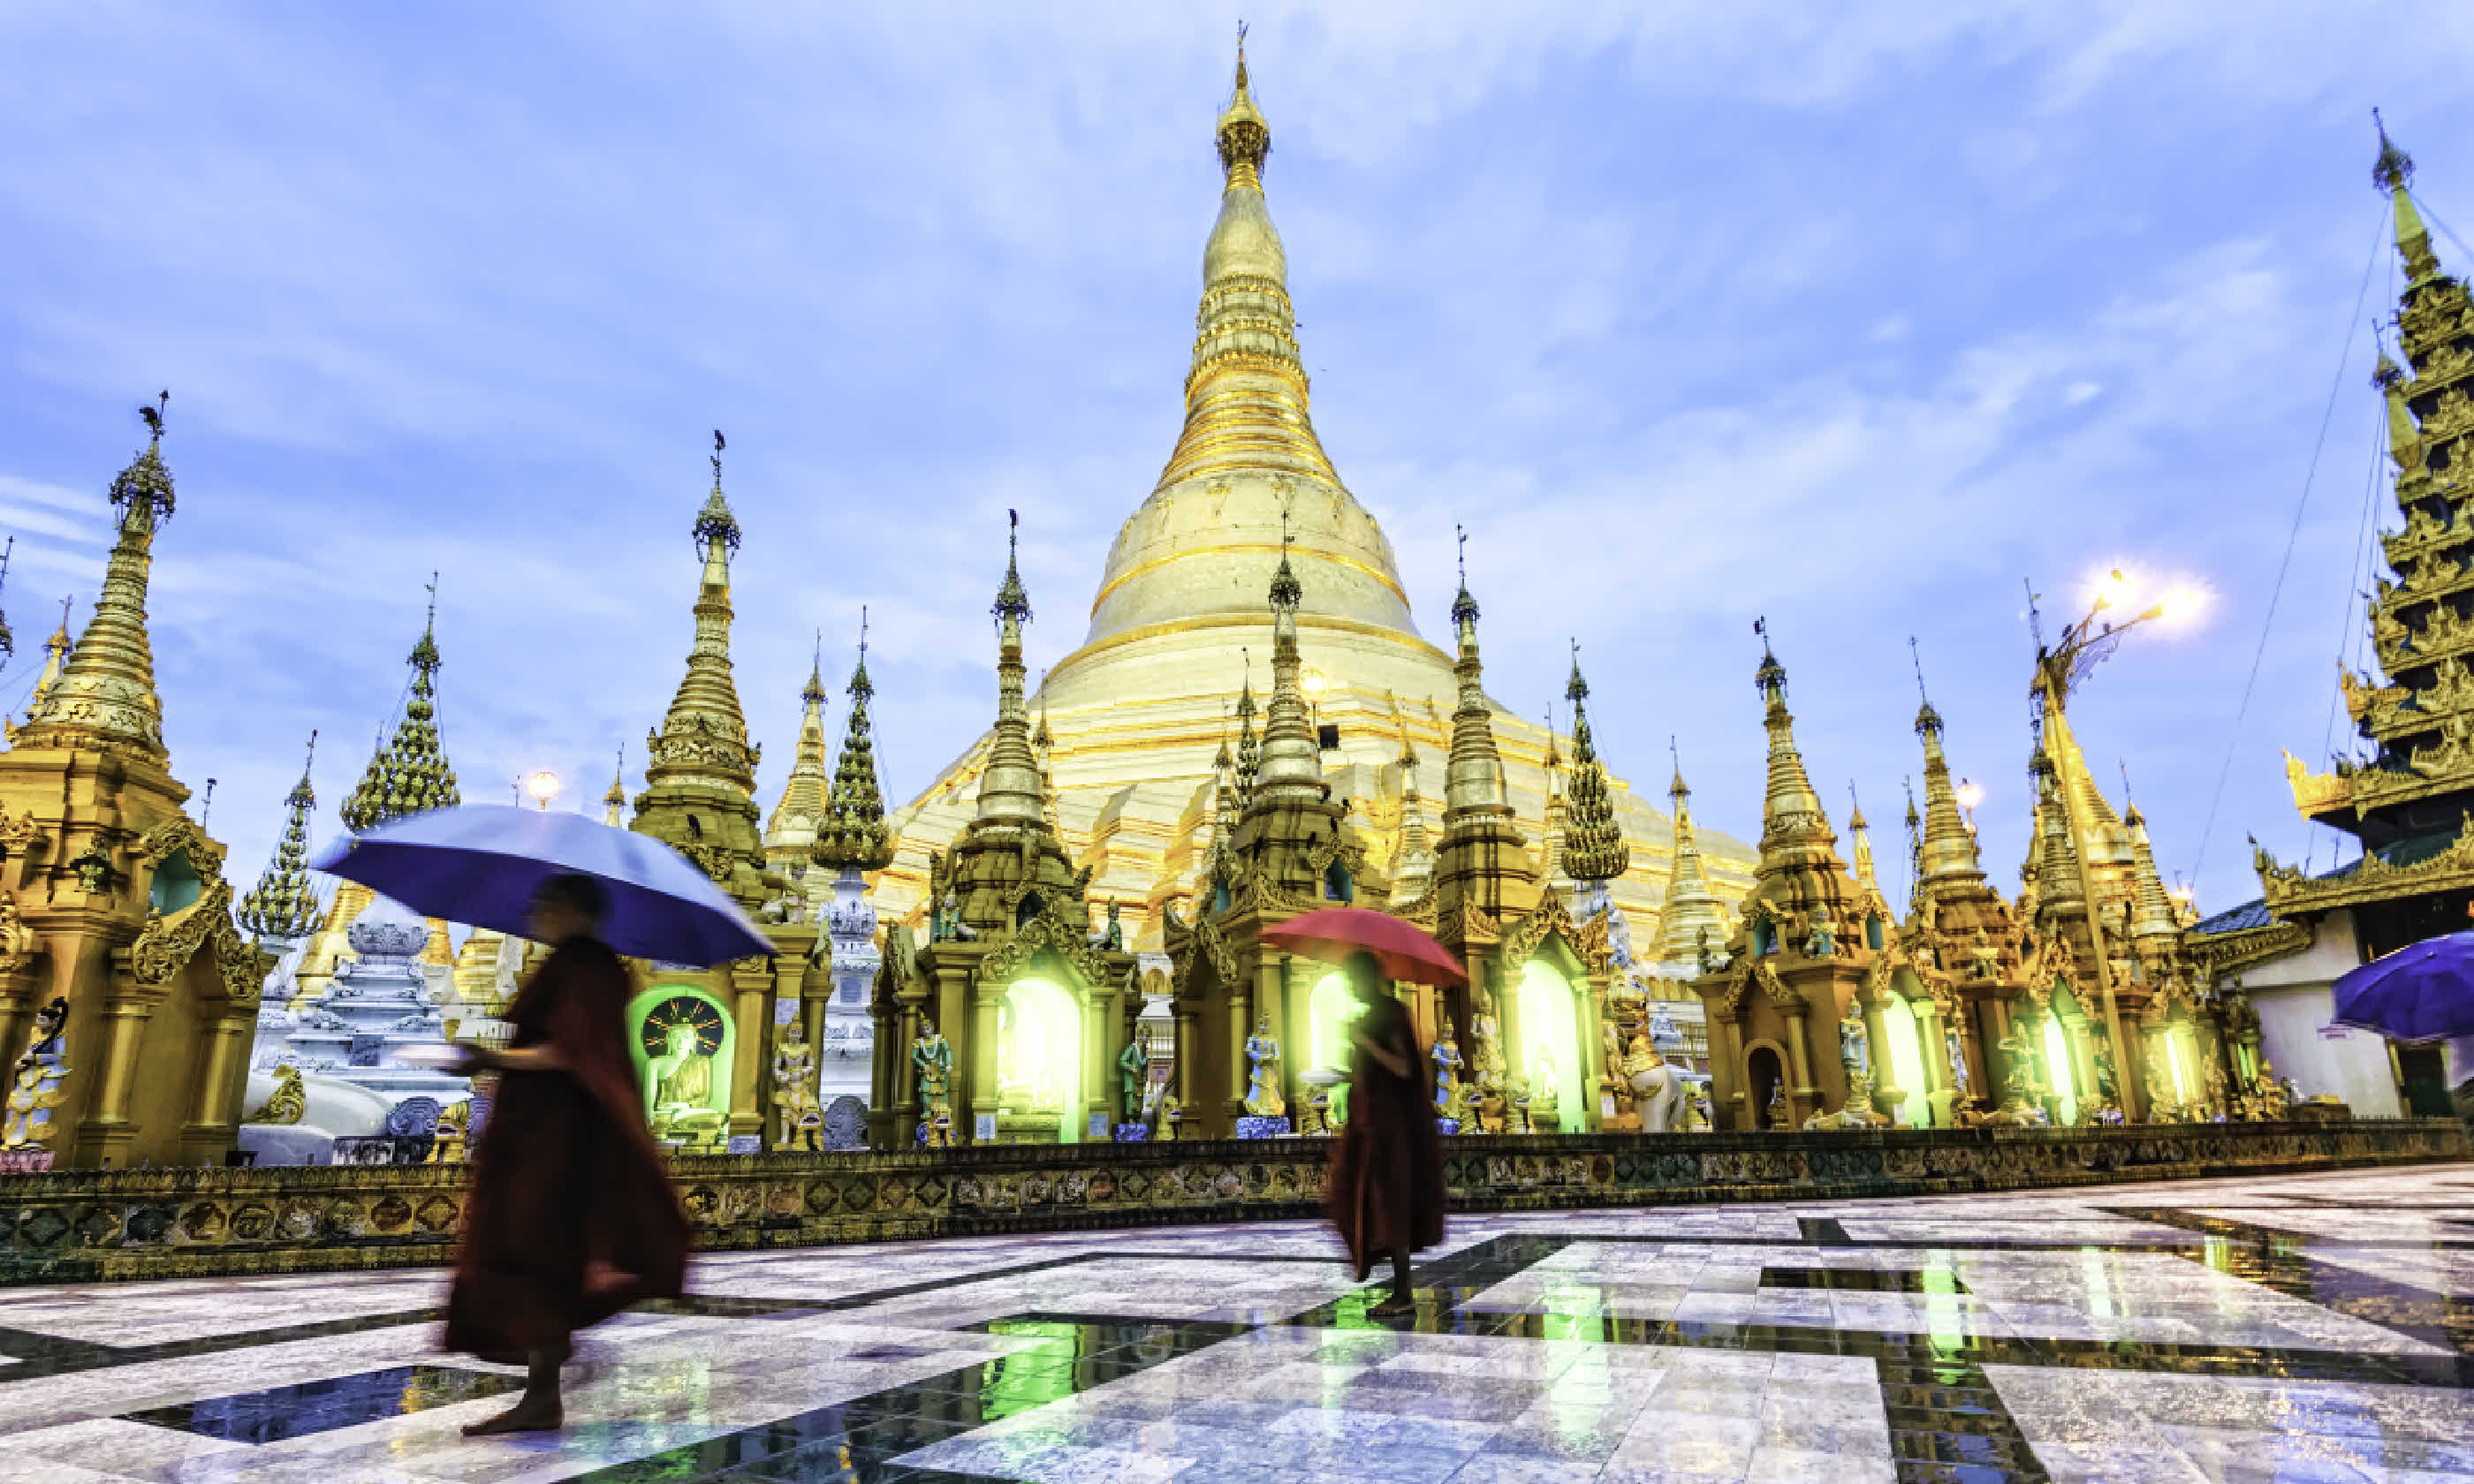 Shwedagon Pagoda in Yangon, Myanmar (Shutterstock: see credit below)